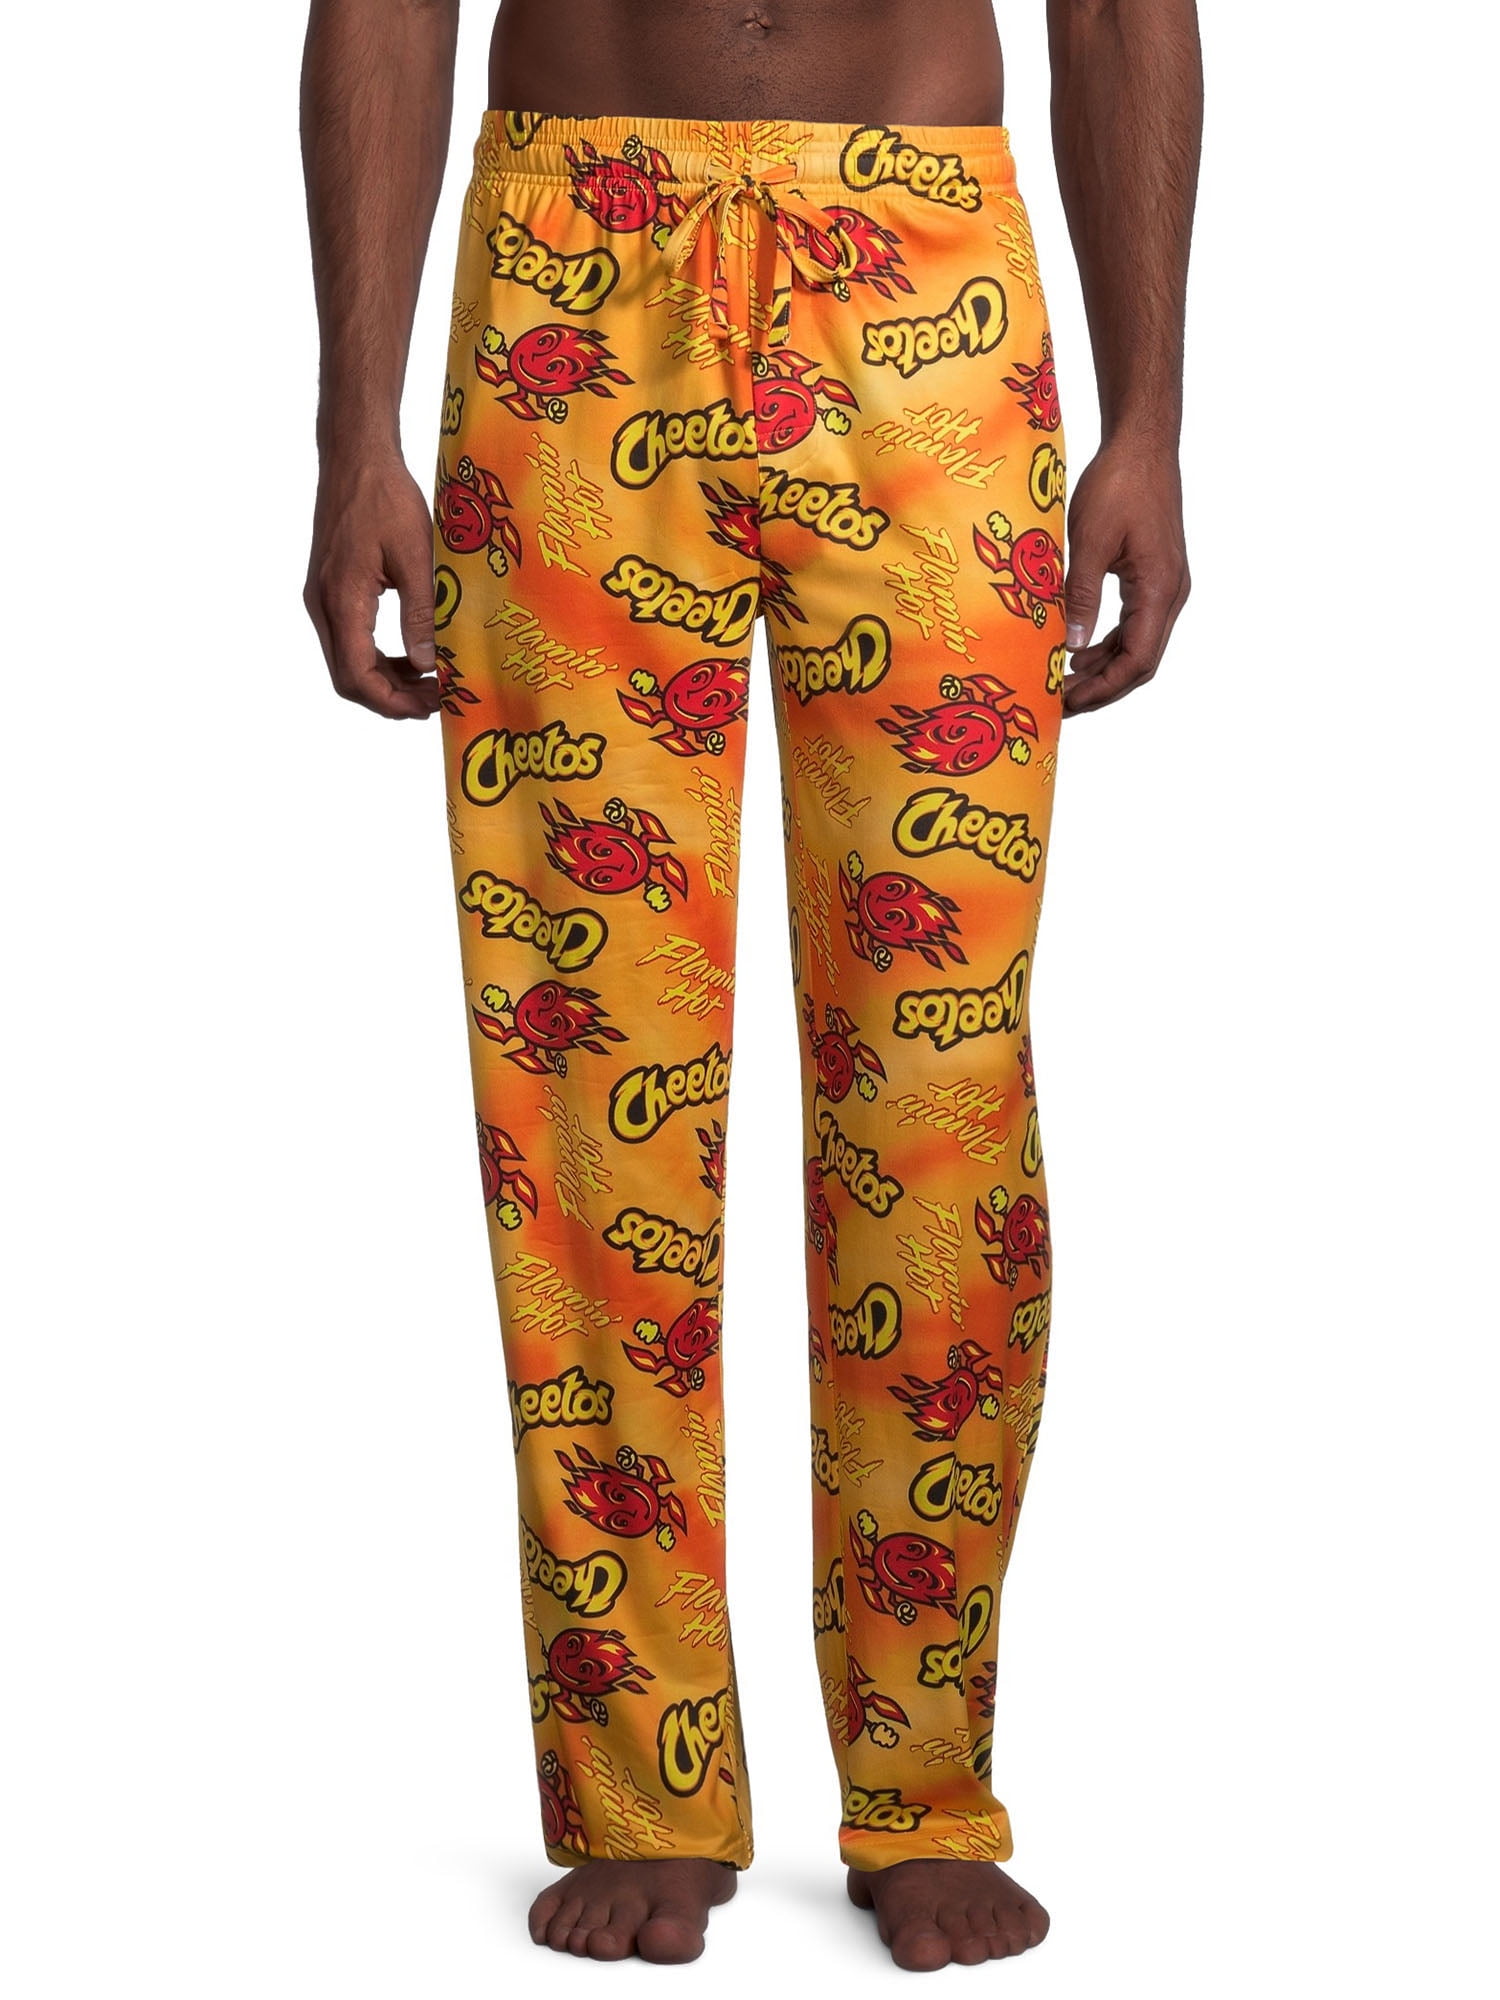 Cheetos Flamin' Hot Logo Pajama Pants | stickhealthcare.co.uk